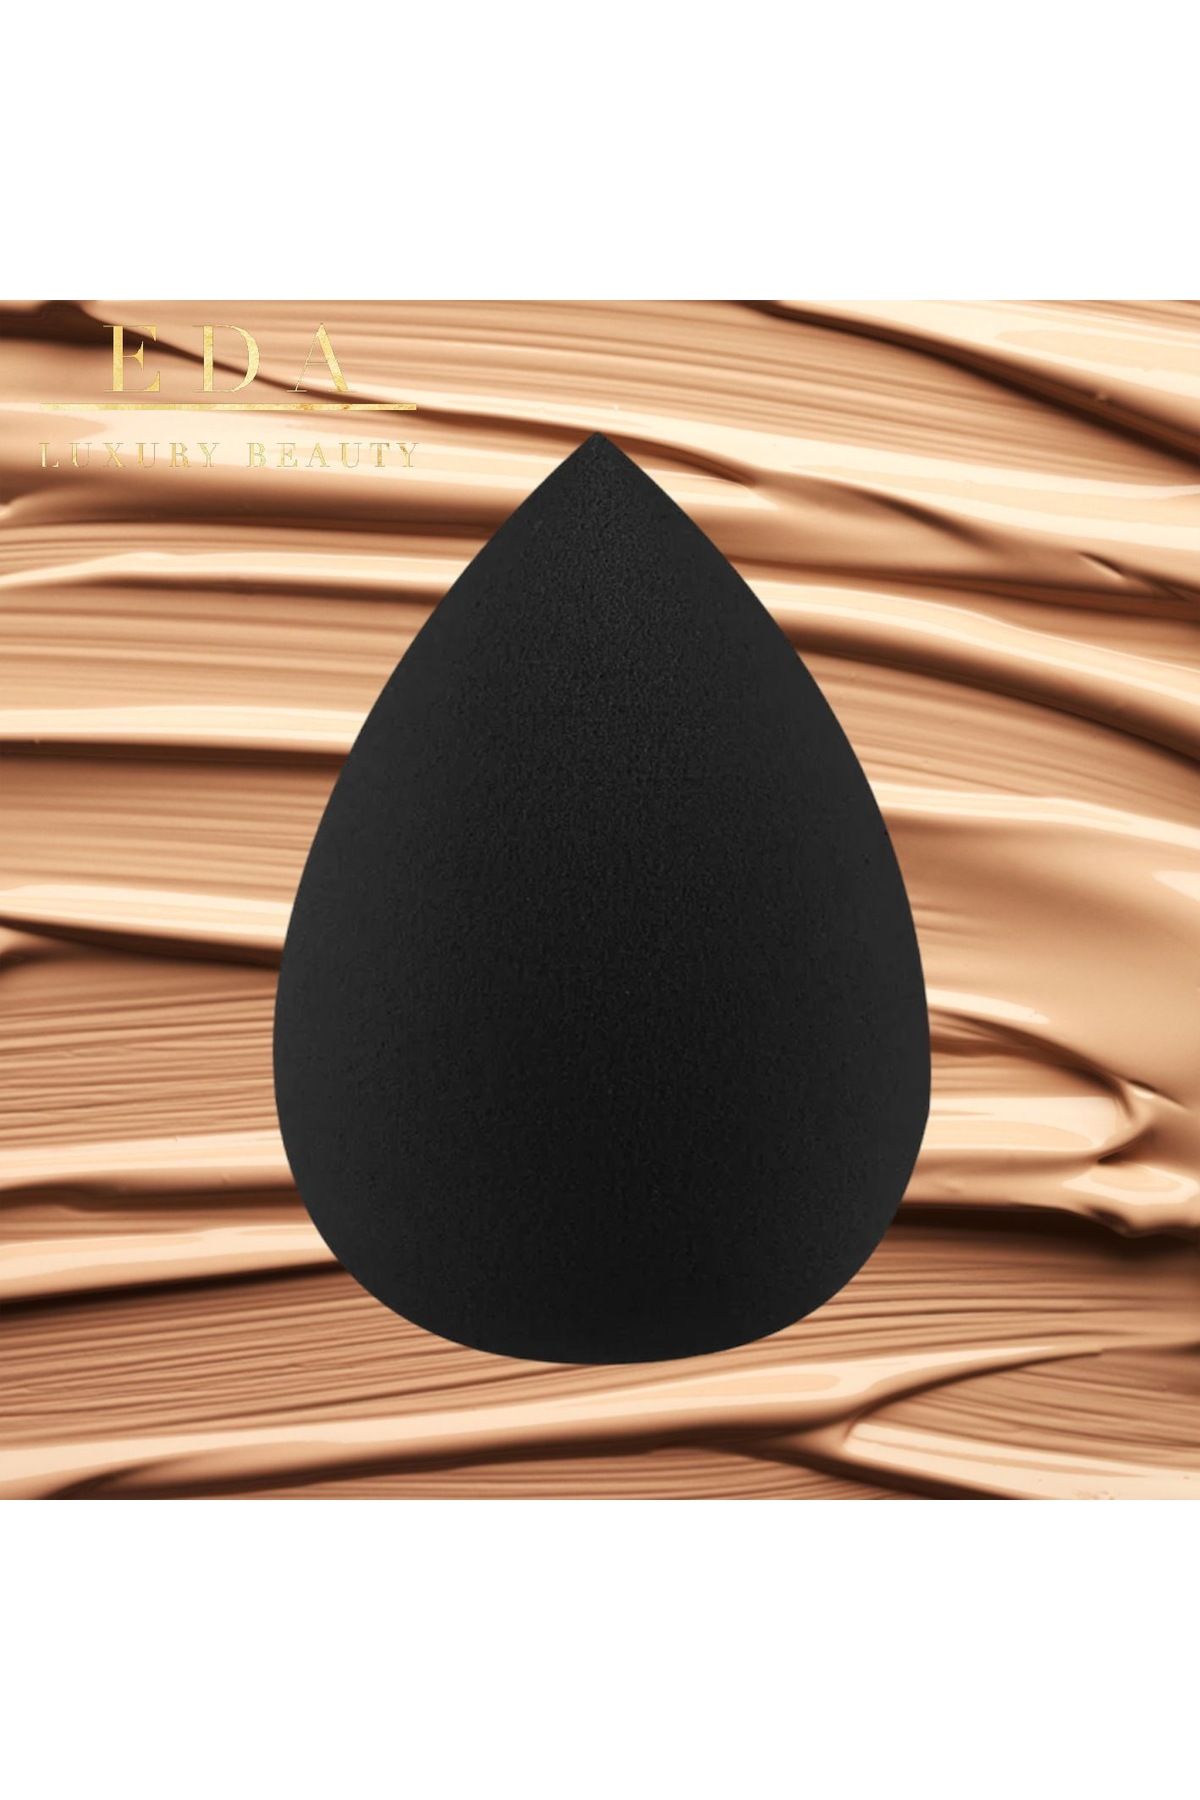 EDA LUXURY BEAUTY Siyah Makyaj Süngeri 100% Non Latex Blender Kontür Kapatıcı Ultra Soft Black Beauty Blender Sponge